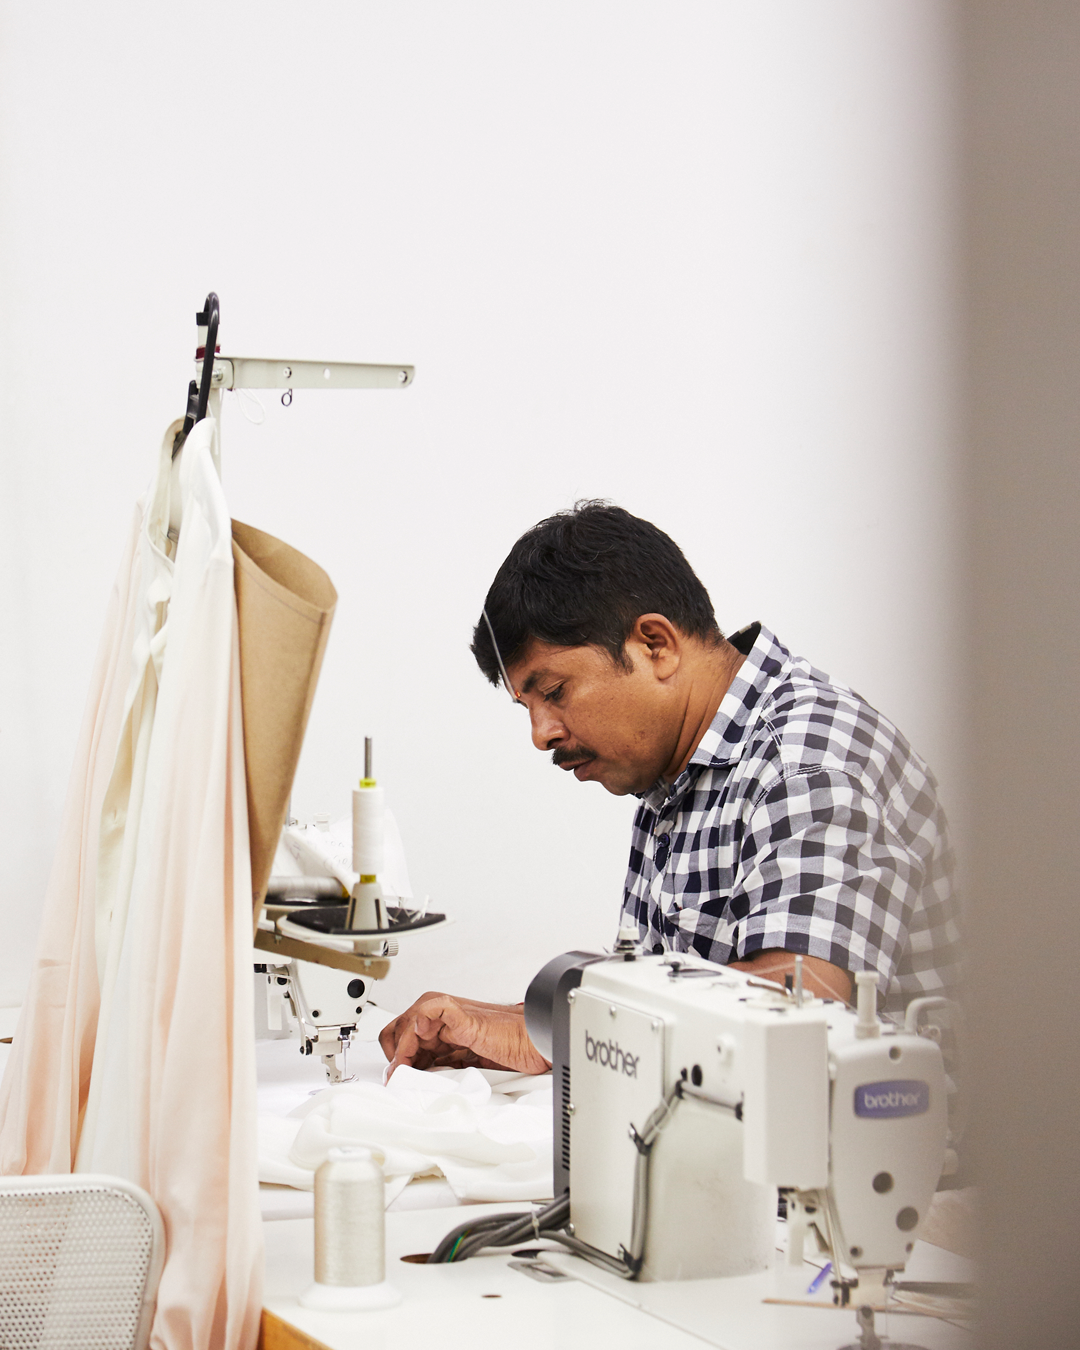 A skilled craftman hand-tailoring one of Varana's eco-friendly fashion garments